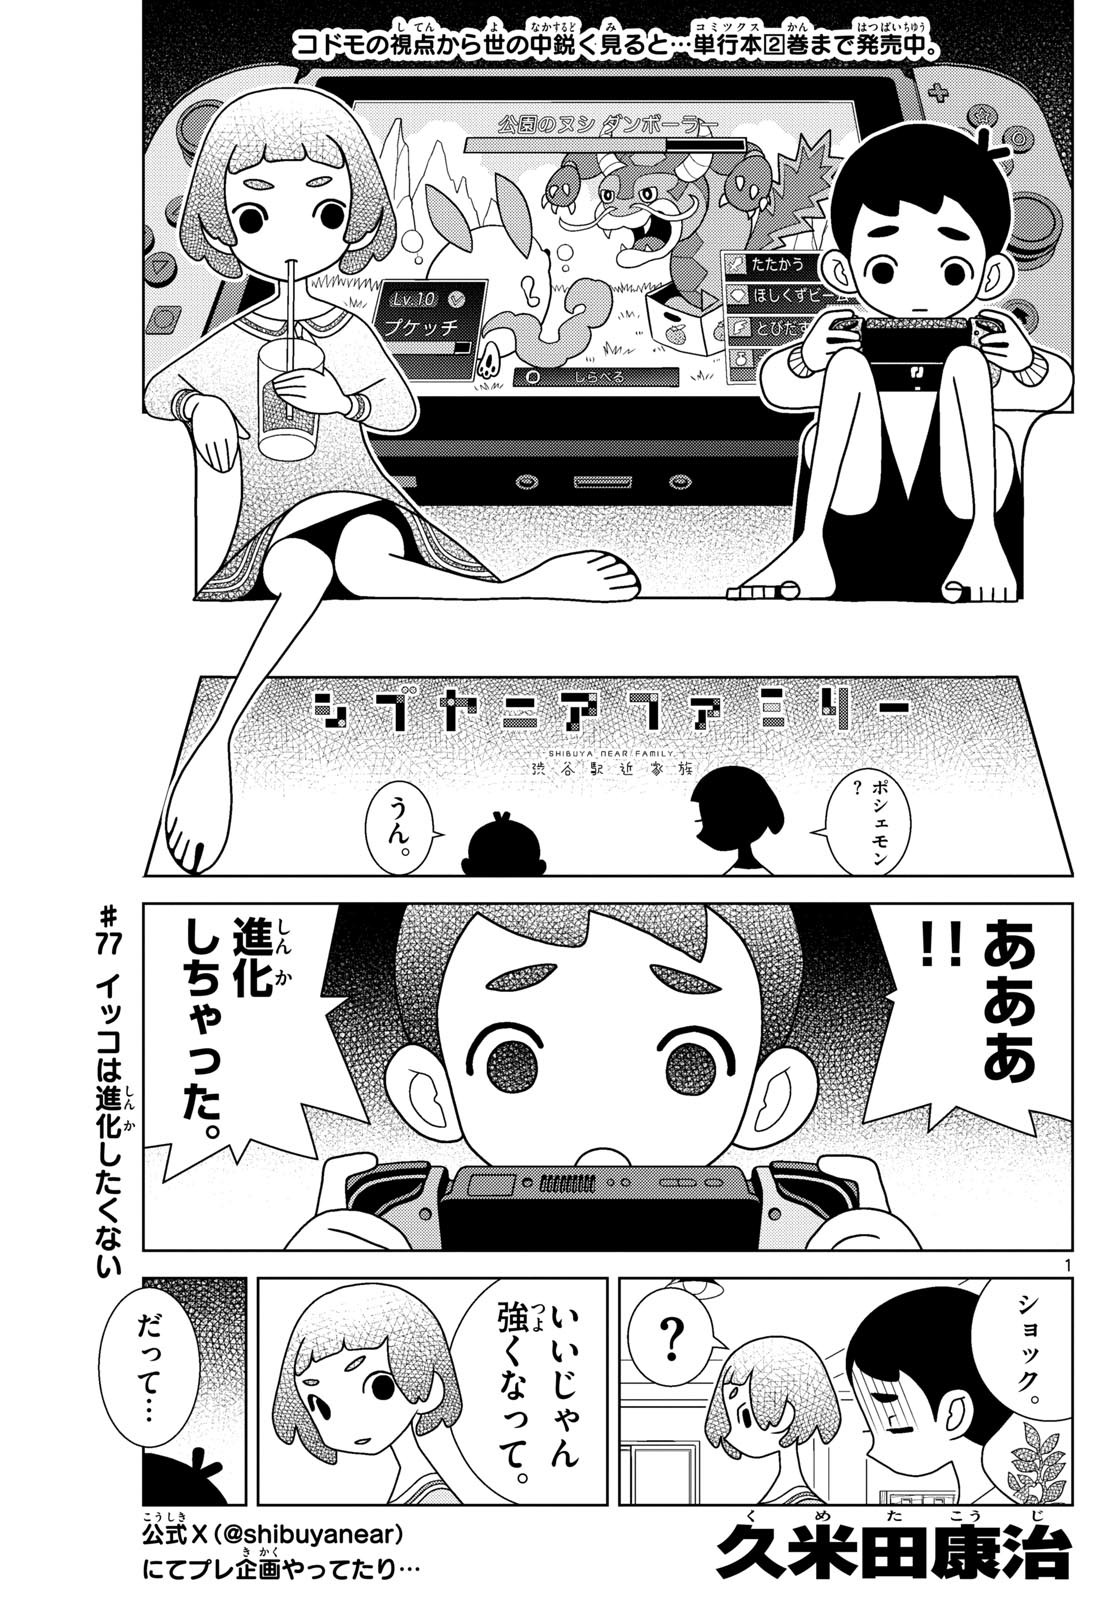 Shibuya Near Family - Chapter 077 - Page 1